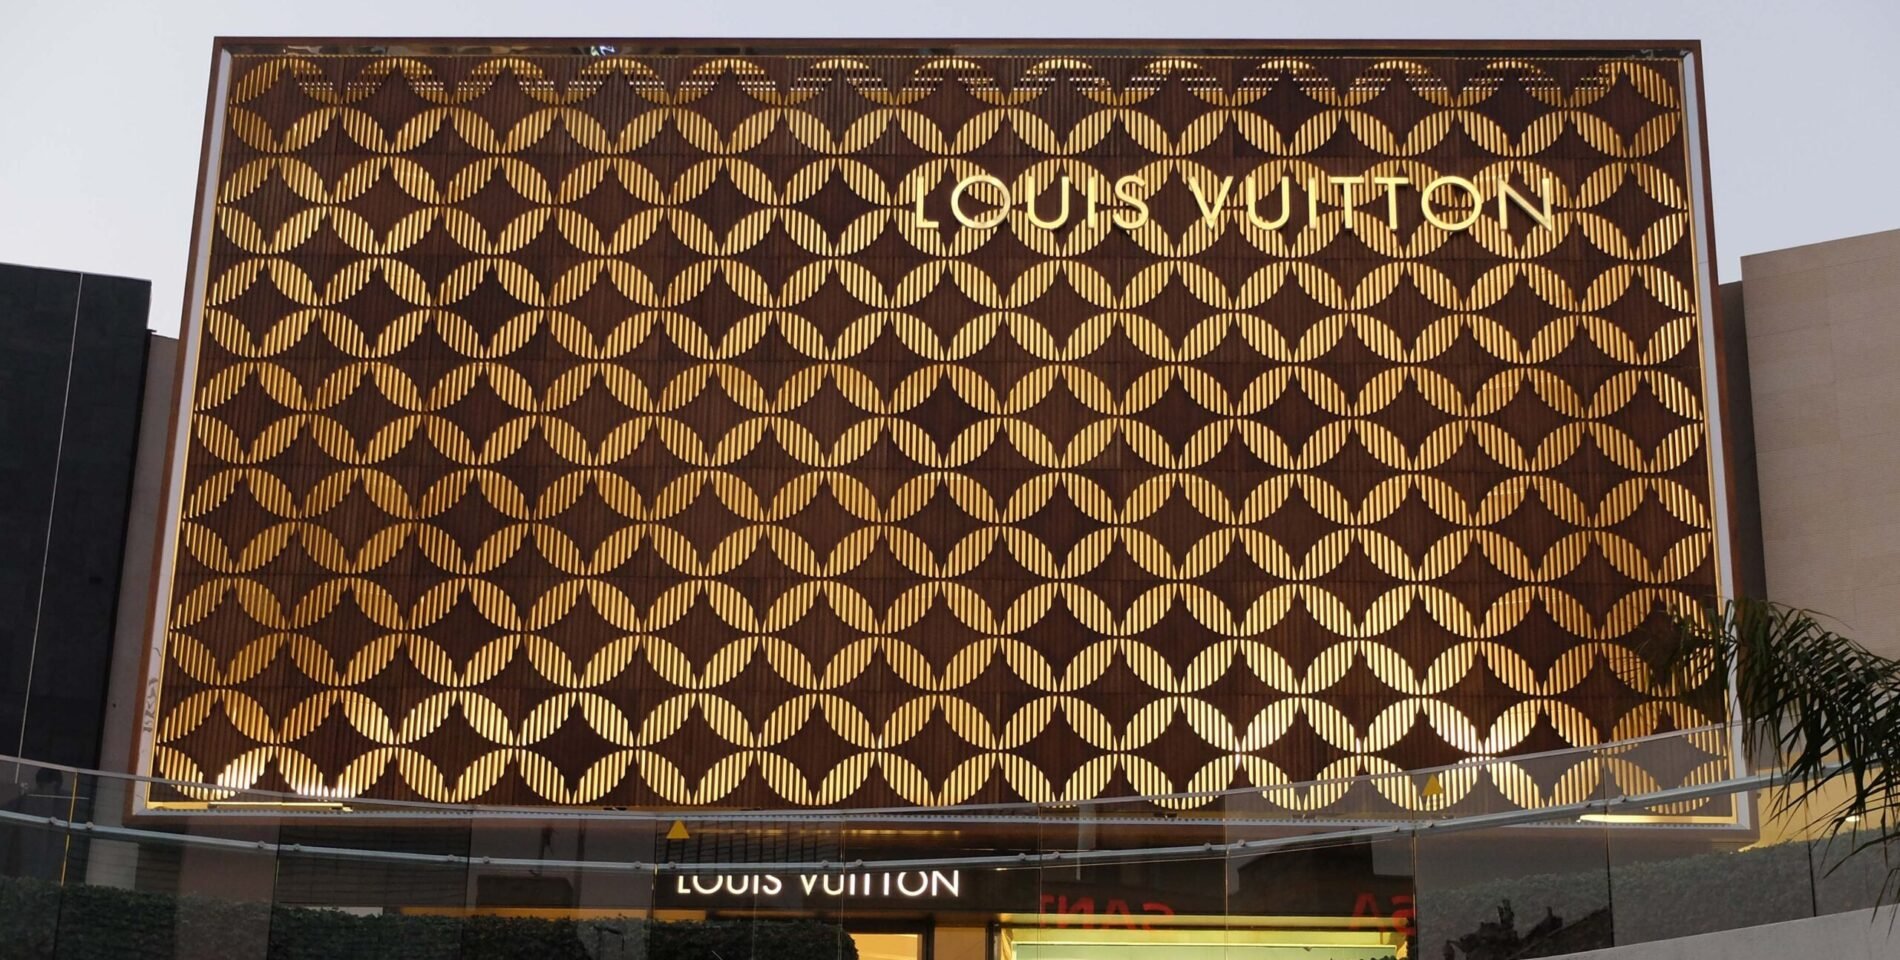 Tienda Louis Vuitton Santiago - Chile